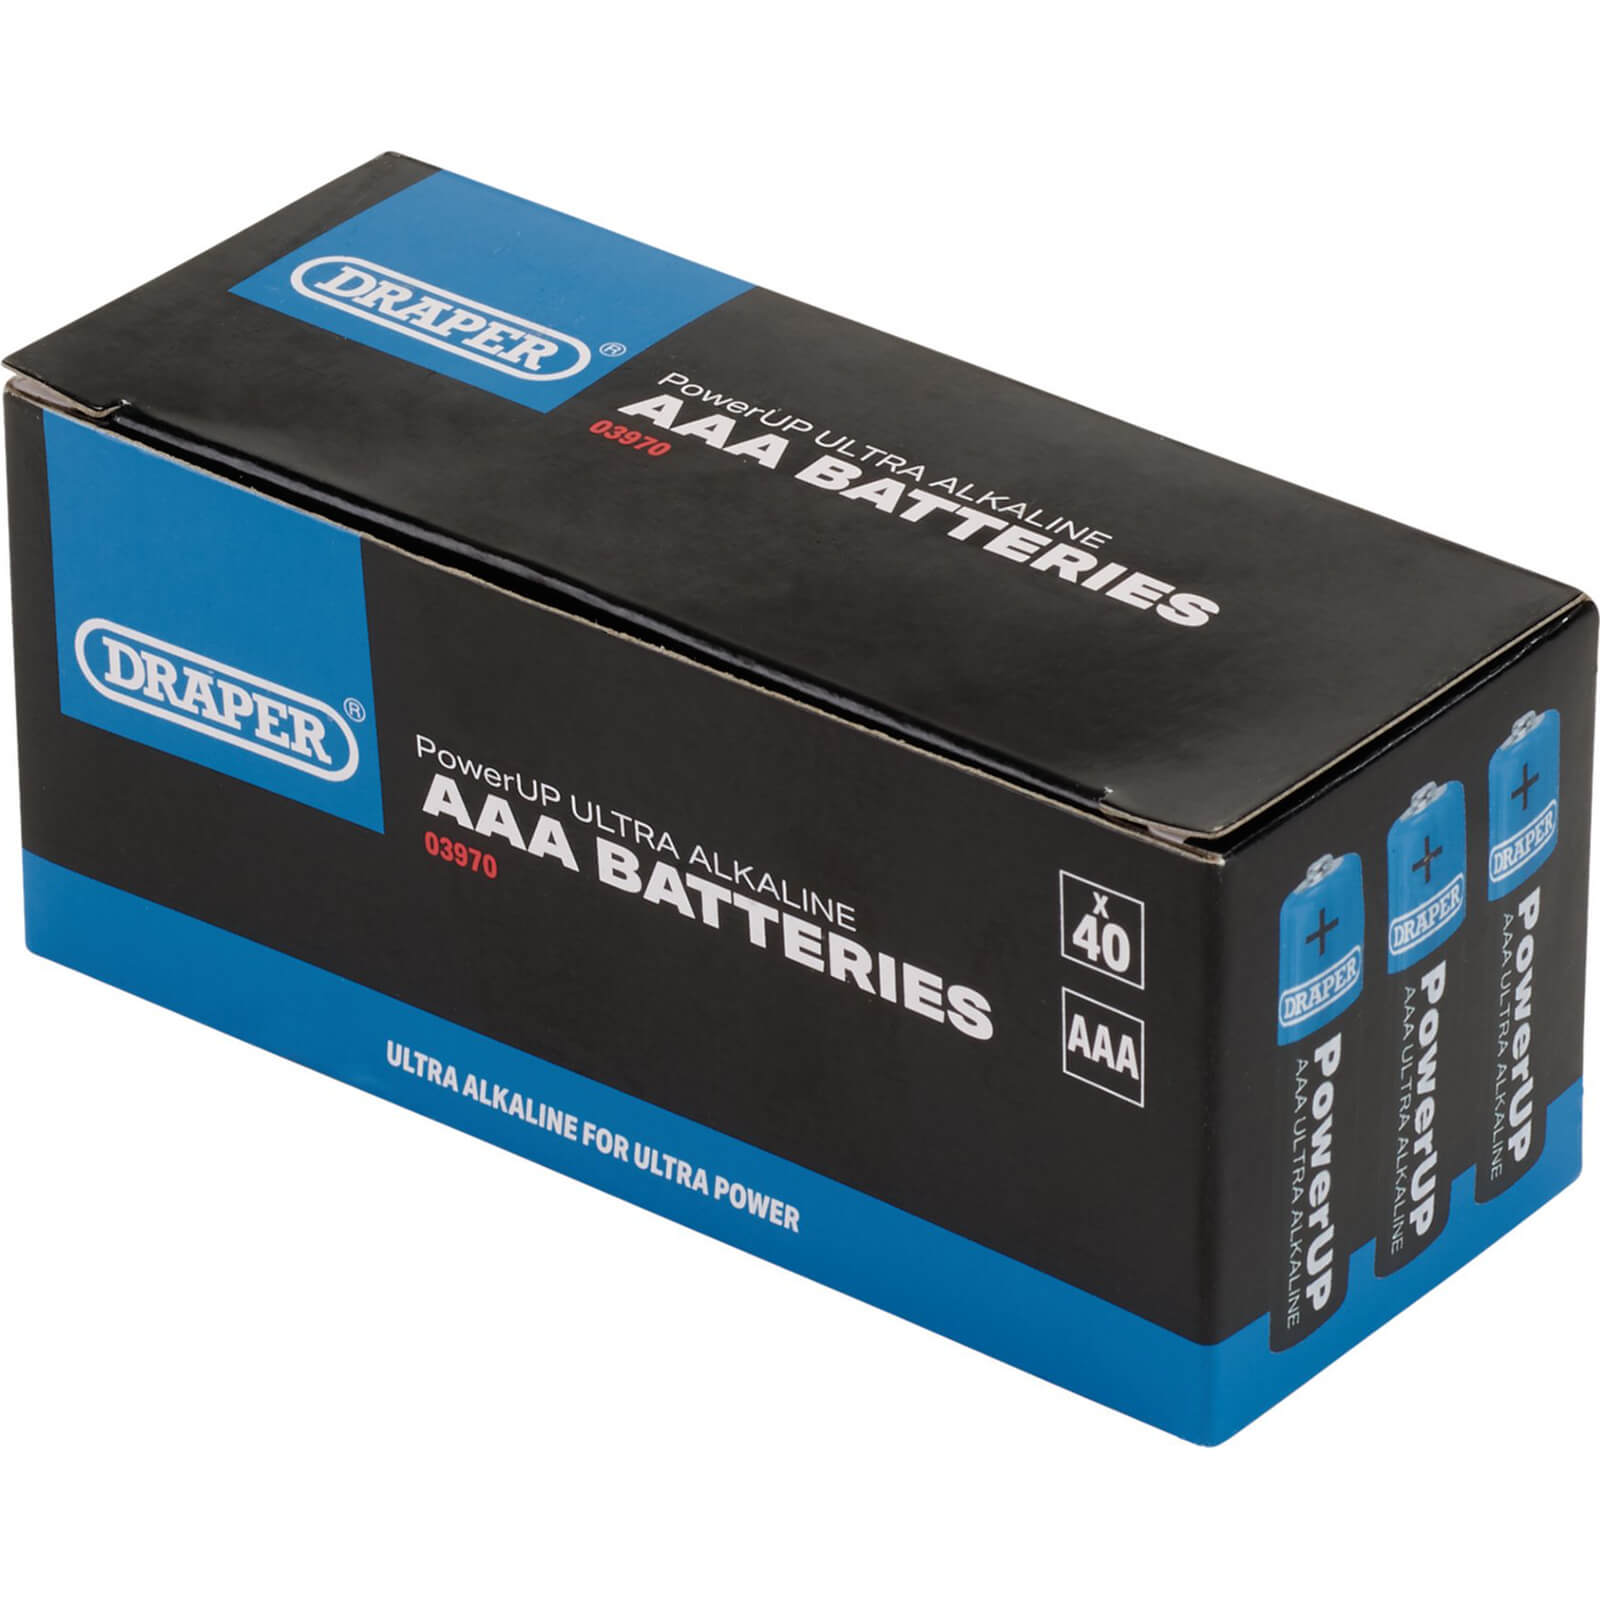 Draper Powerup Ultra Alkaline AAA Batteries Pack of 40